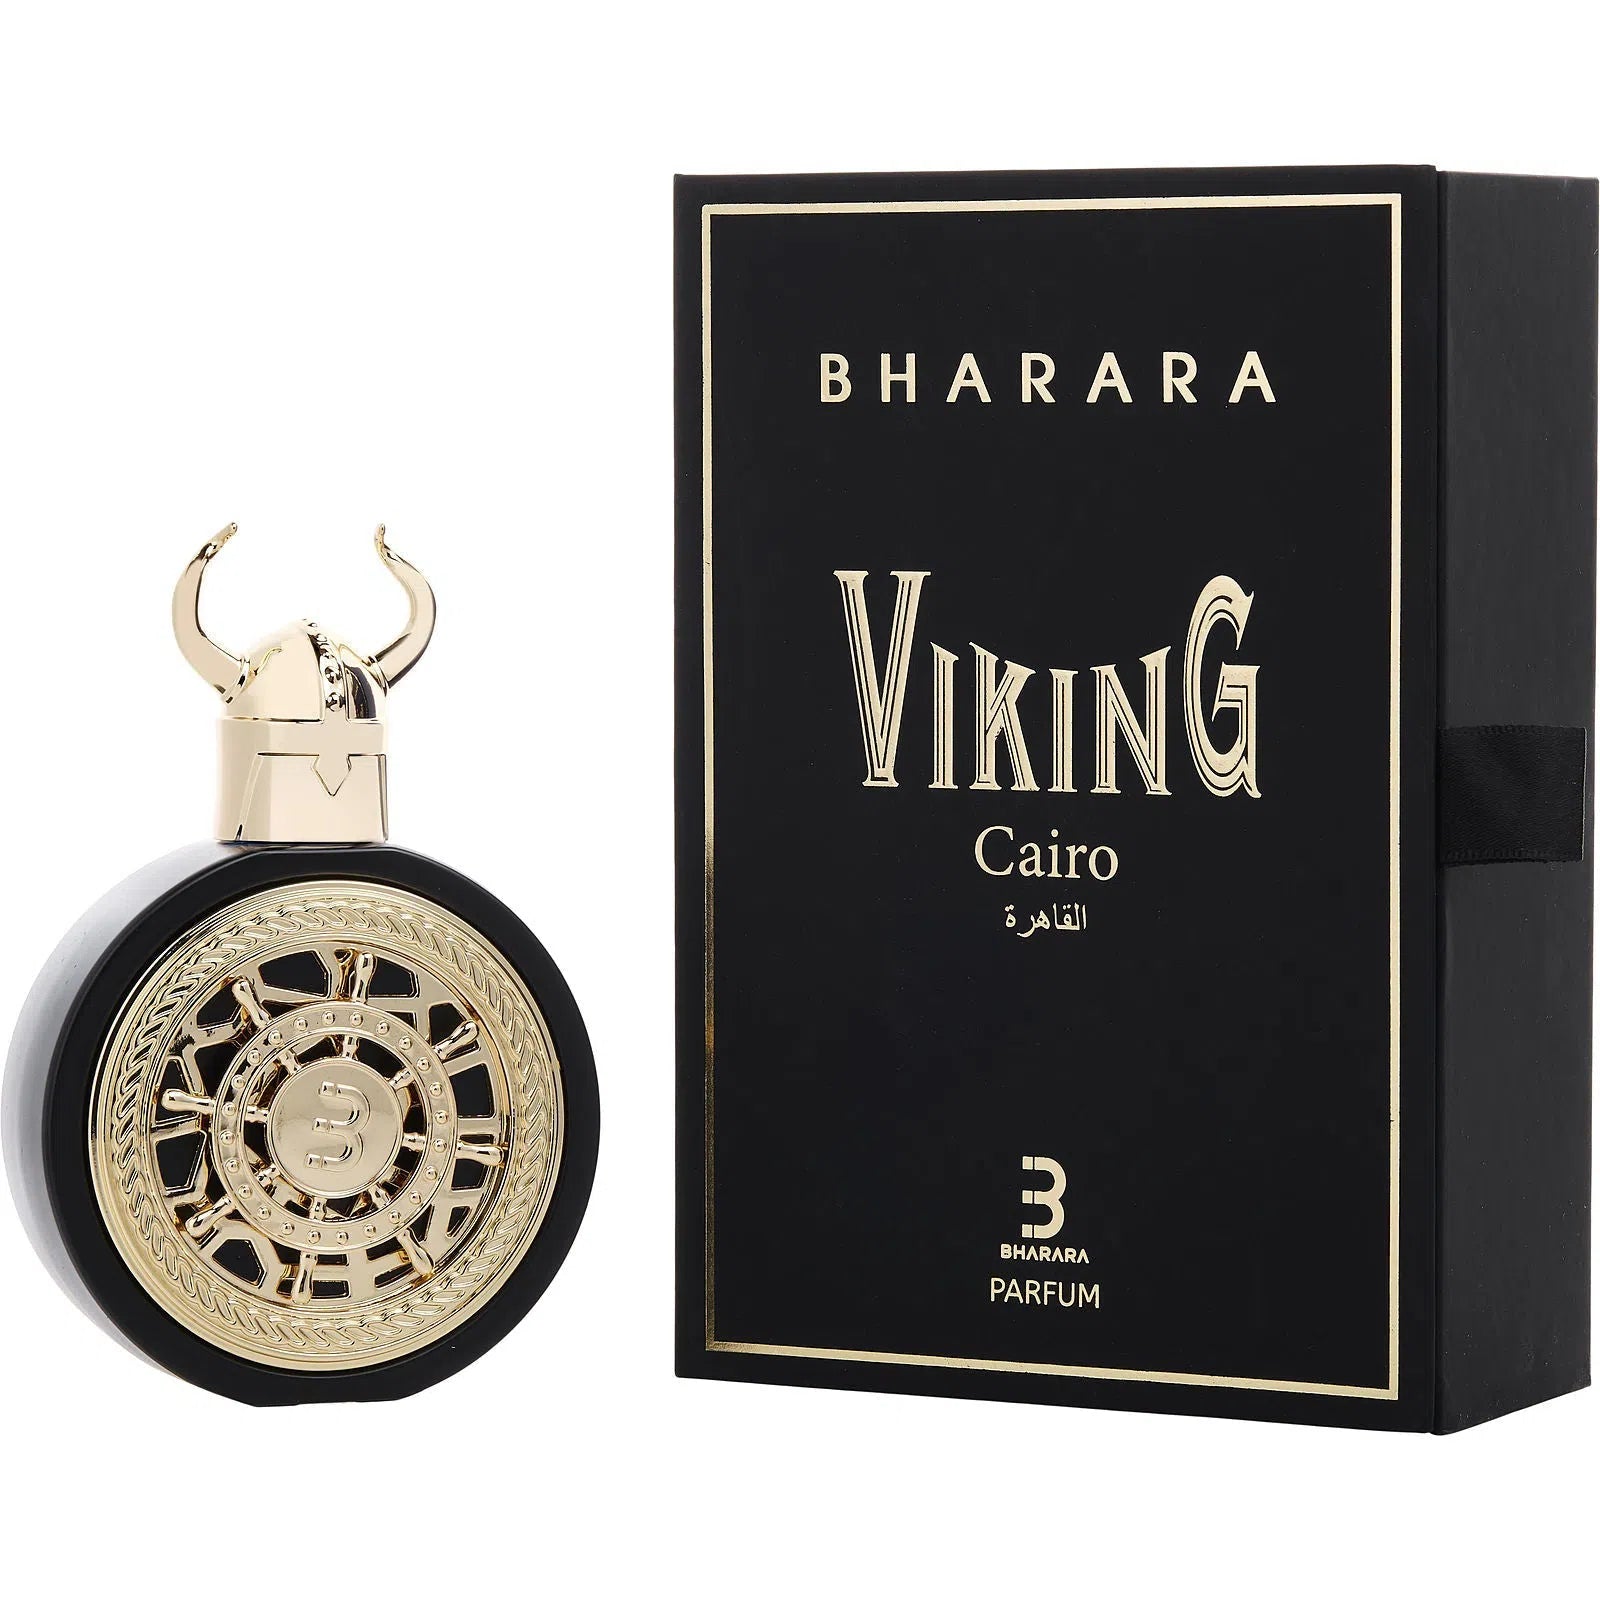 Perfume Bharara Viking Cairo Parfum (U) / 100 ml - 850050062011- Prive Perfumes Honduras